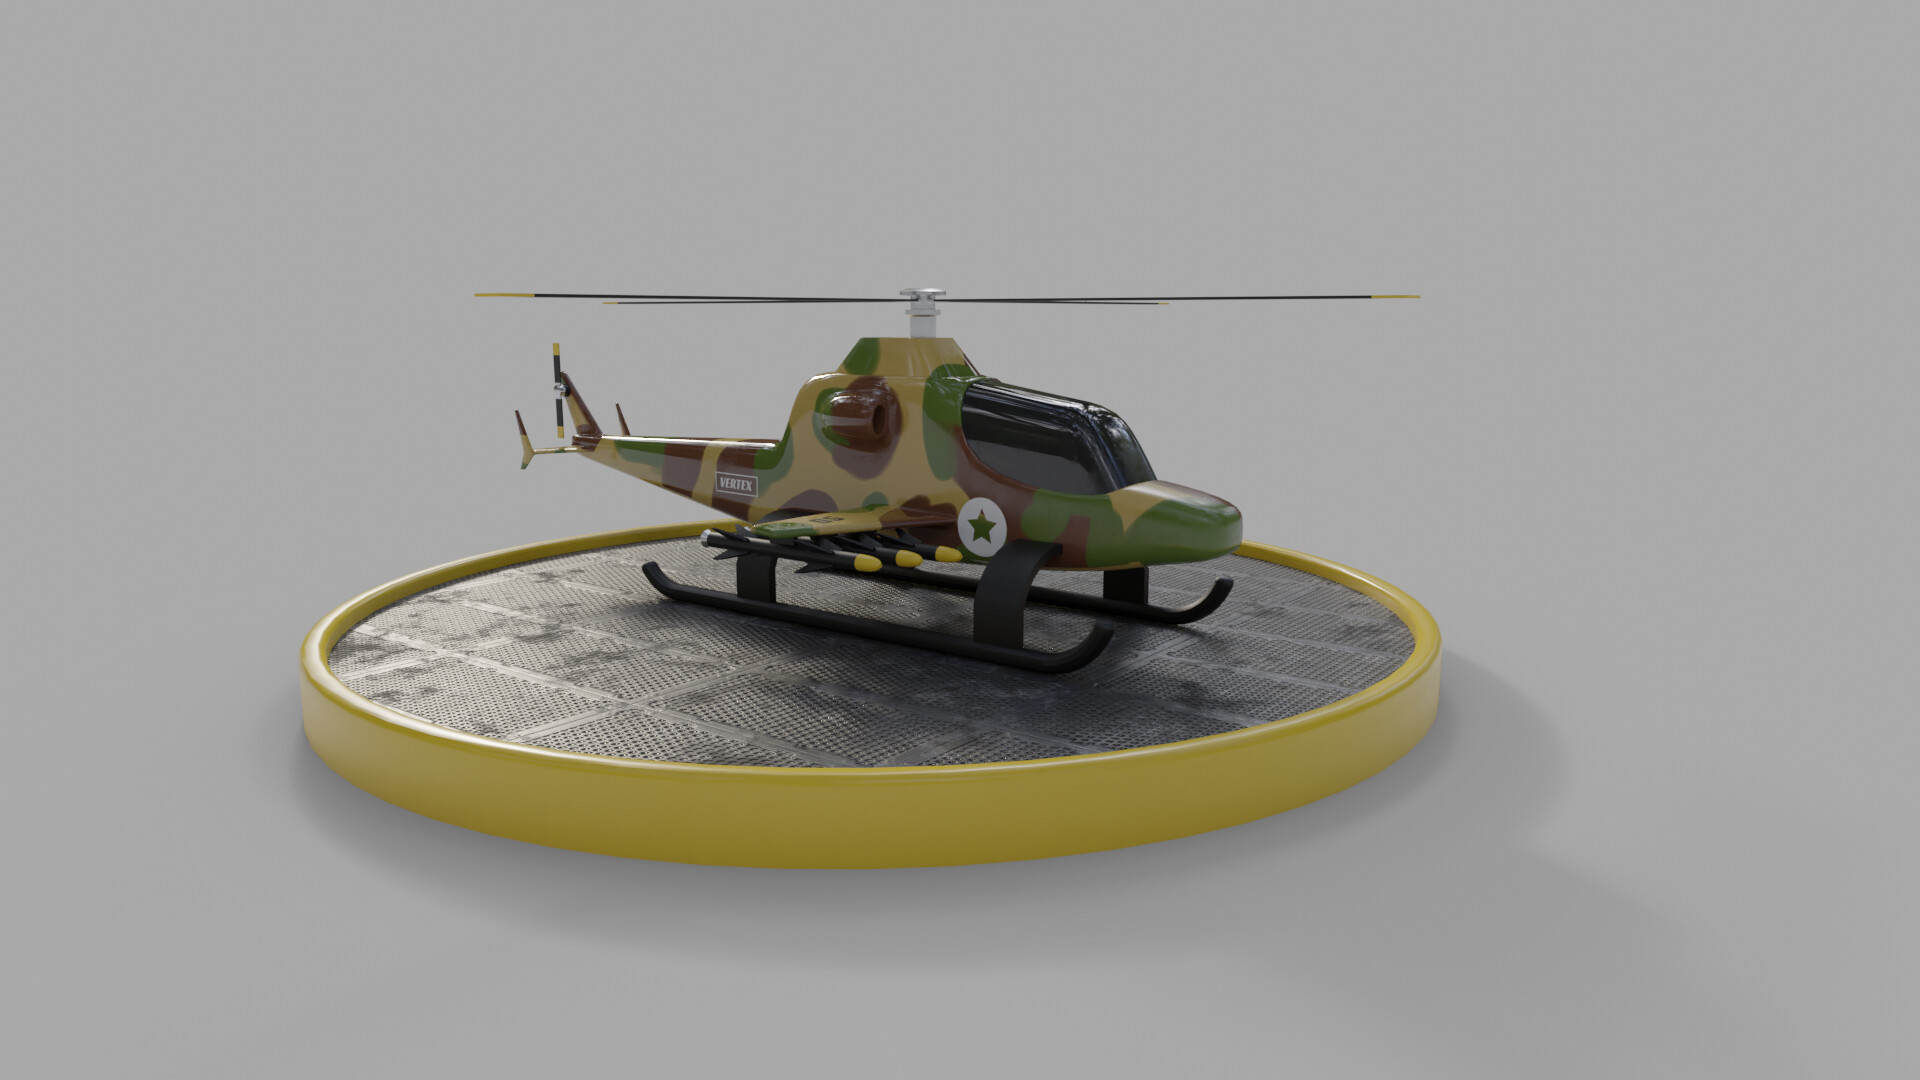 ArtStation - Learning Blender  Udemy Course: Helicopter Project